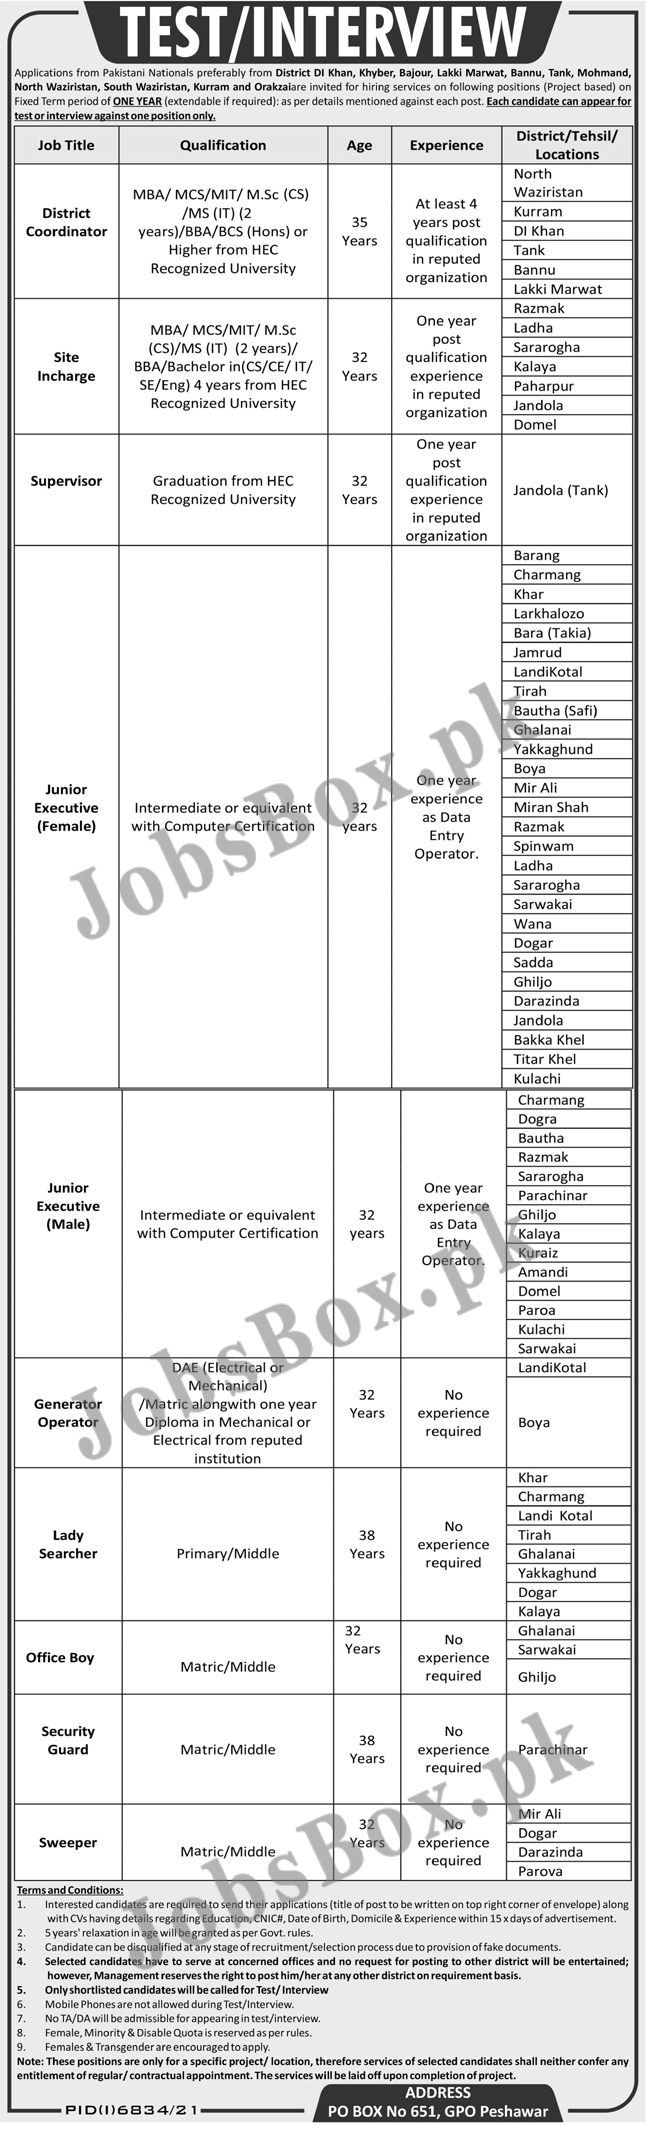 PO Box 651 Peshawar Jobs 2022 in Khyber Pakhtunkhwa